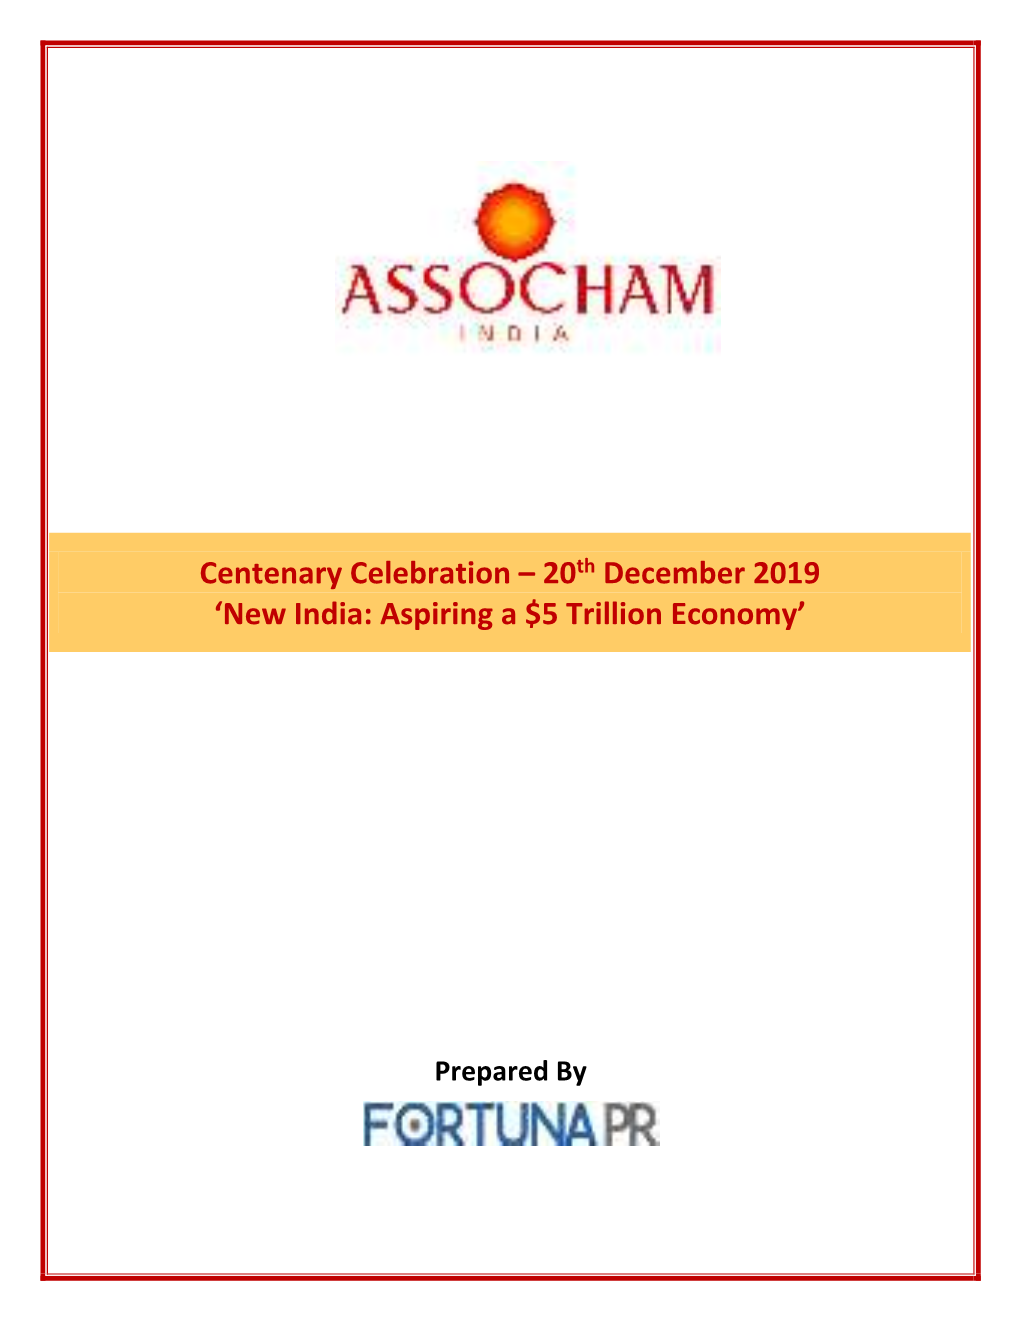 New India: Aspiring a $5 Trillion Economy’